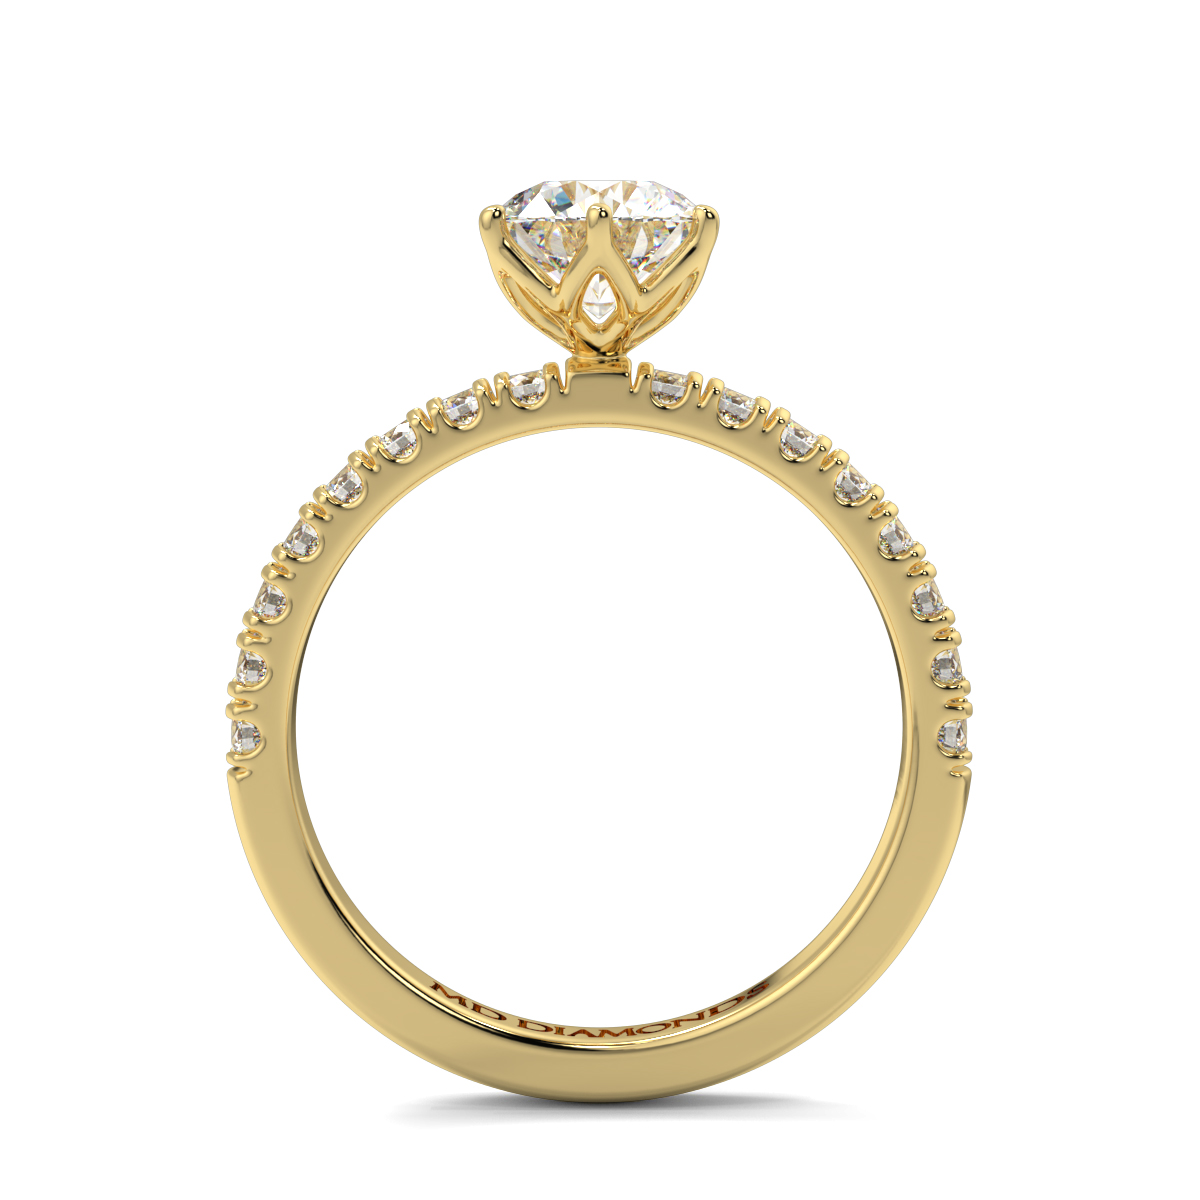 Round 6 Claw Microset Diamond Ring